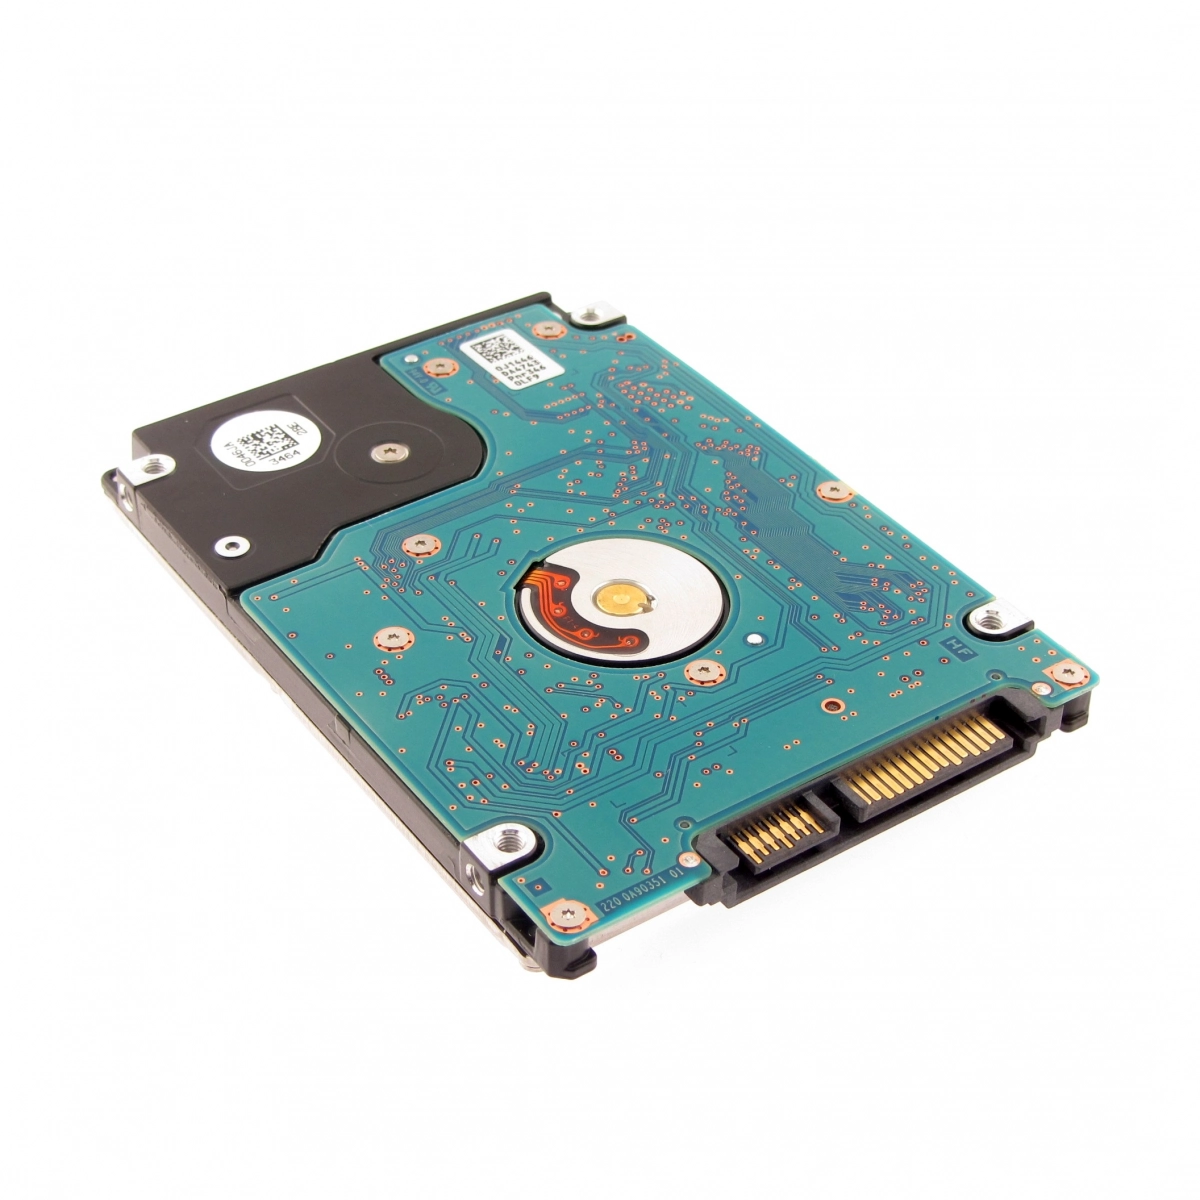 Notebook-Festplatte 1TB, 5400rpm, 128MB für HP Pavilion dv7-1025